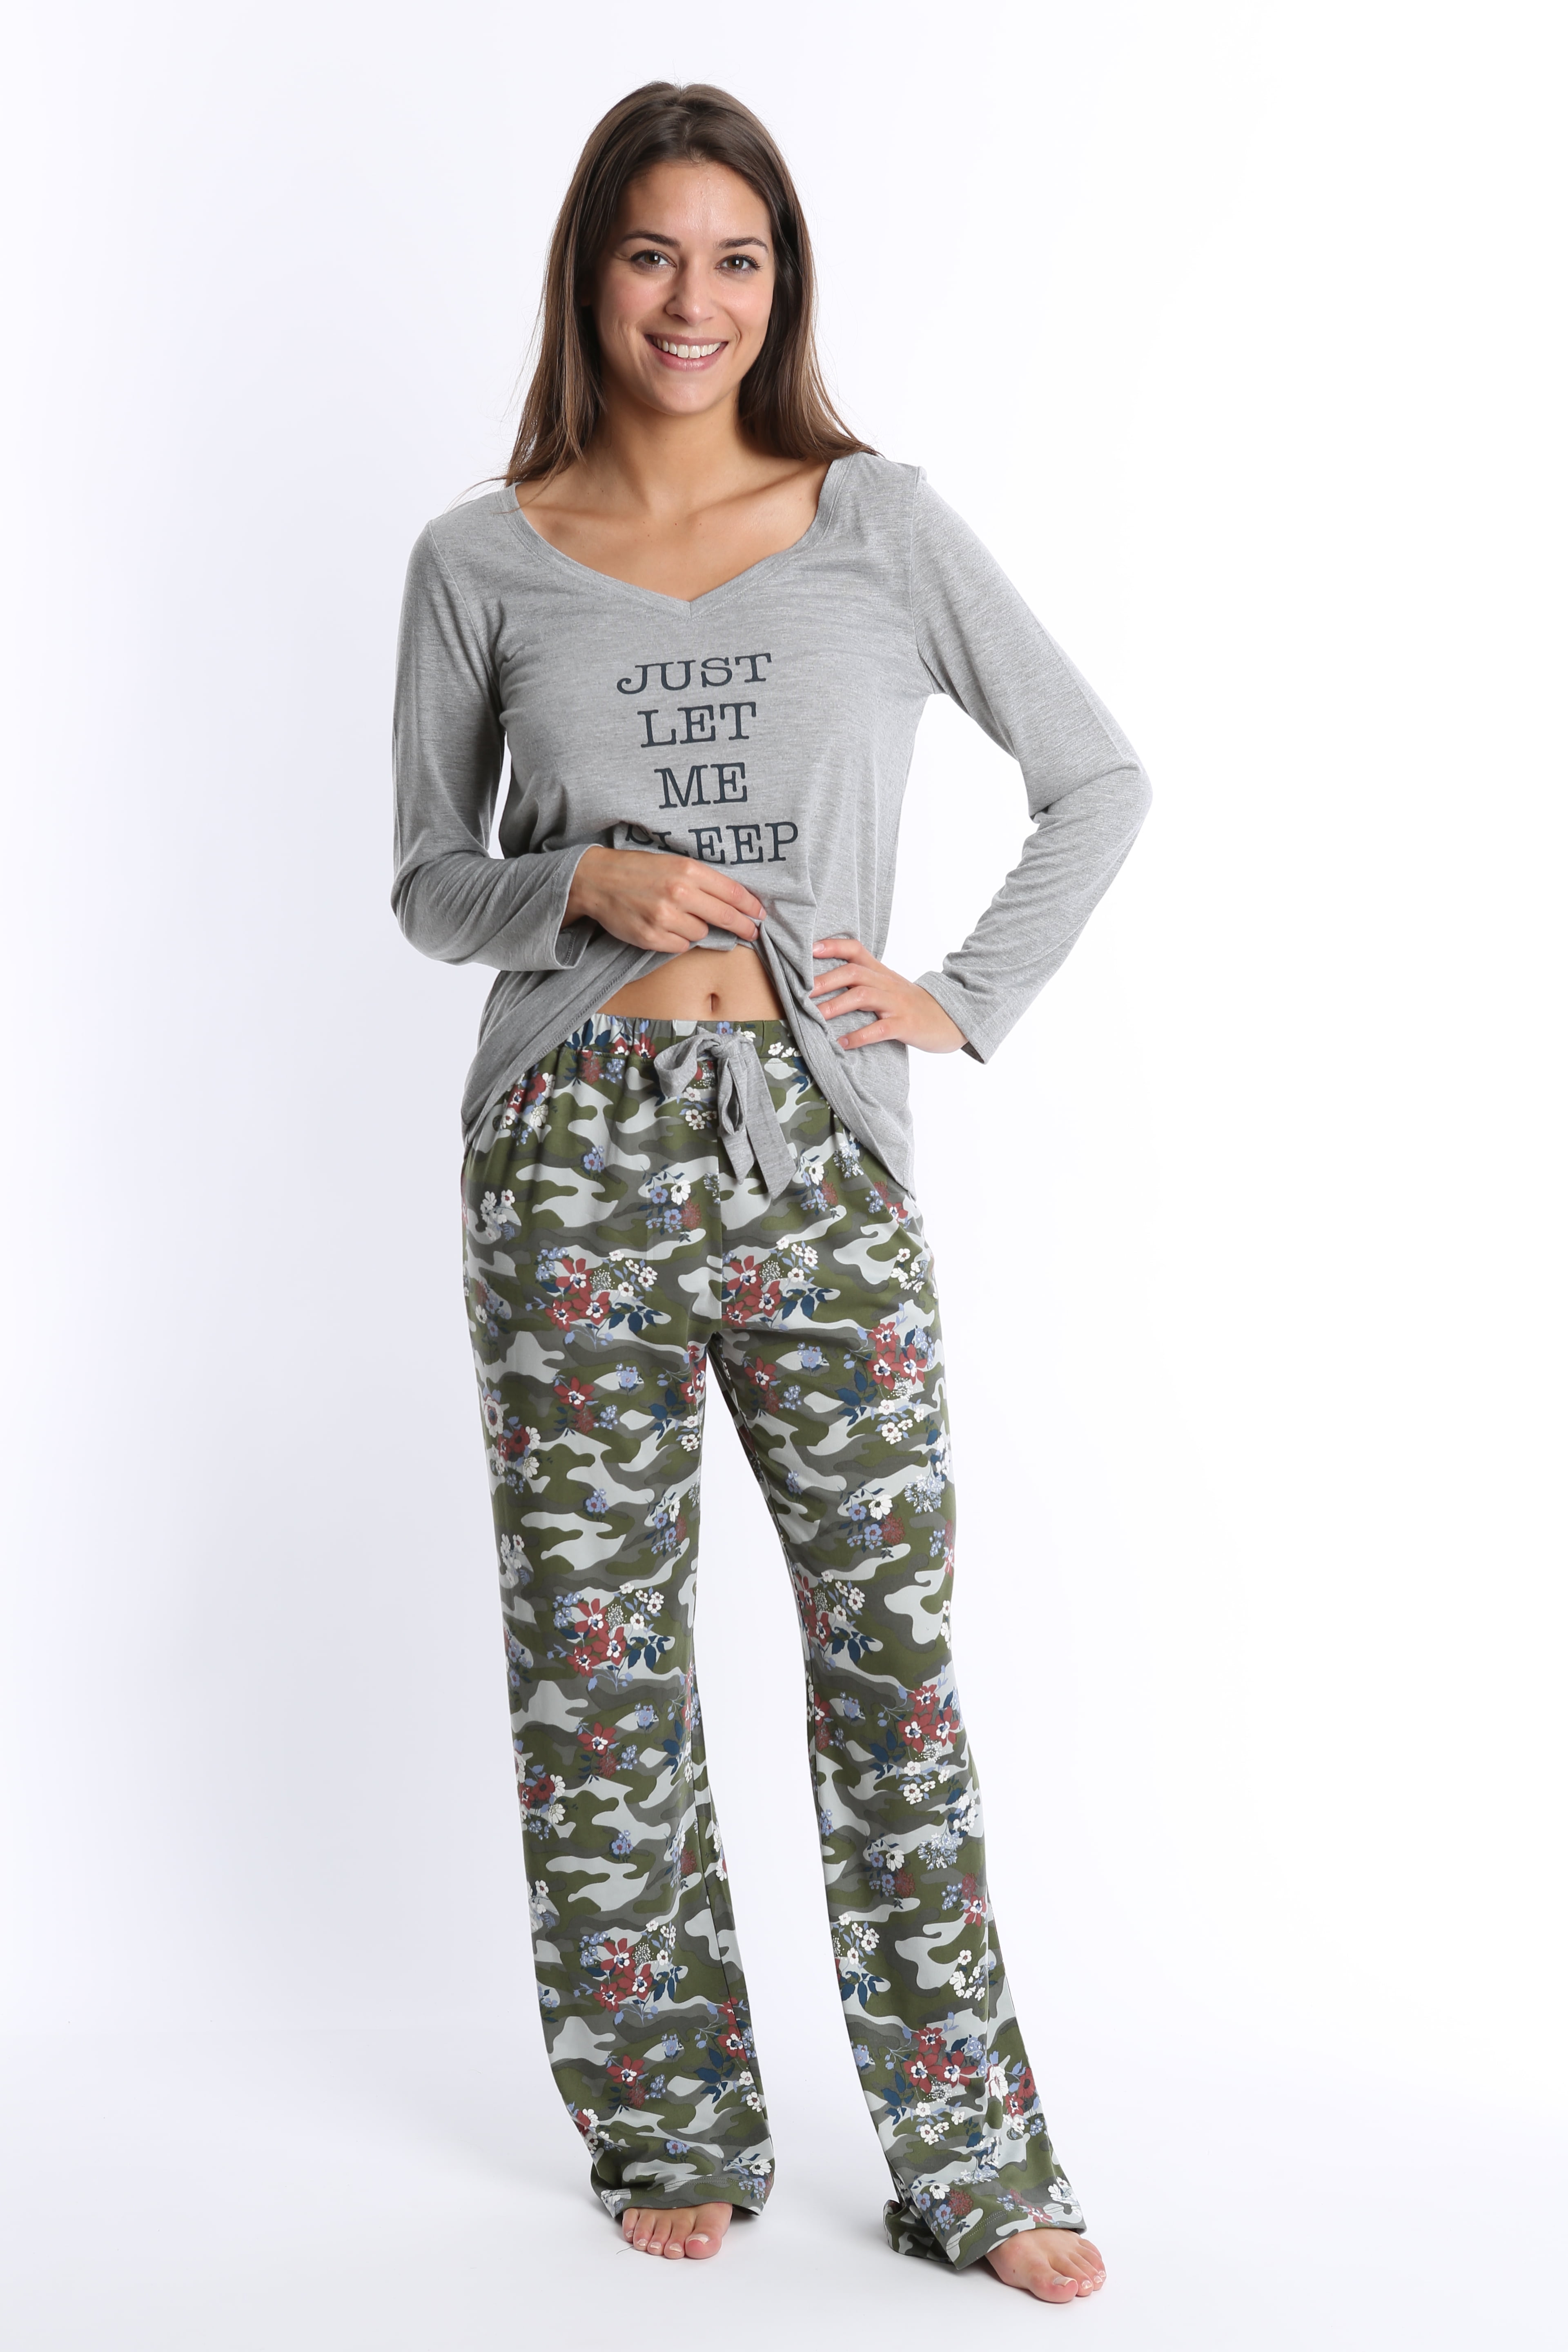 Flower Cotton Pyjamas Long Sleeve Long Pants